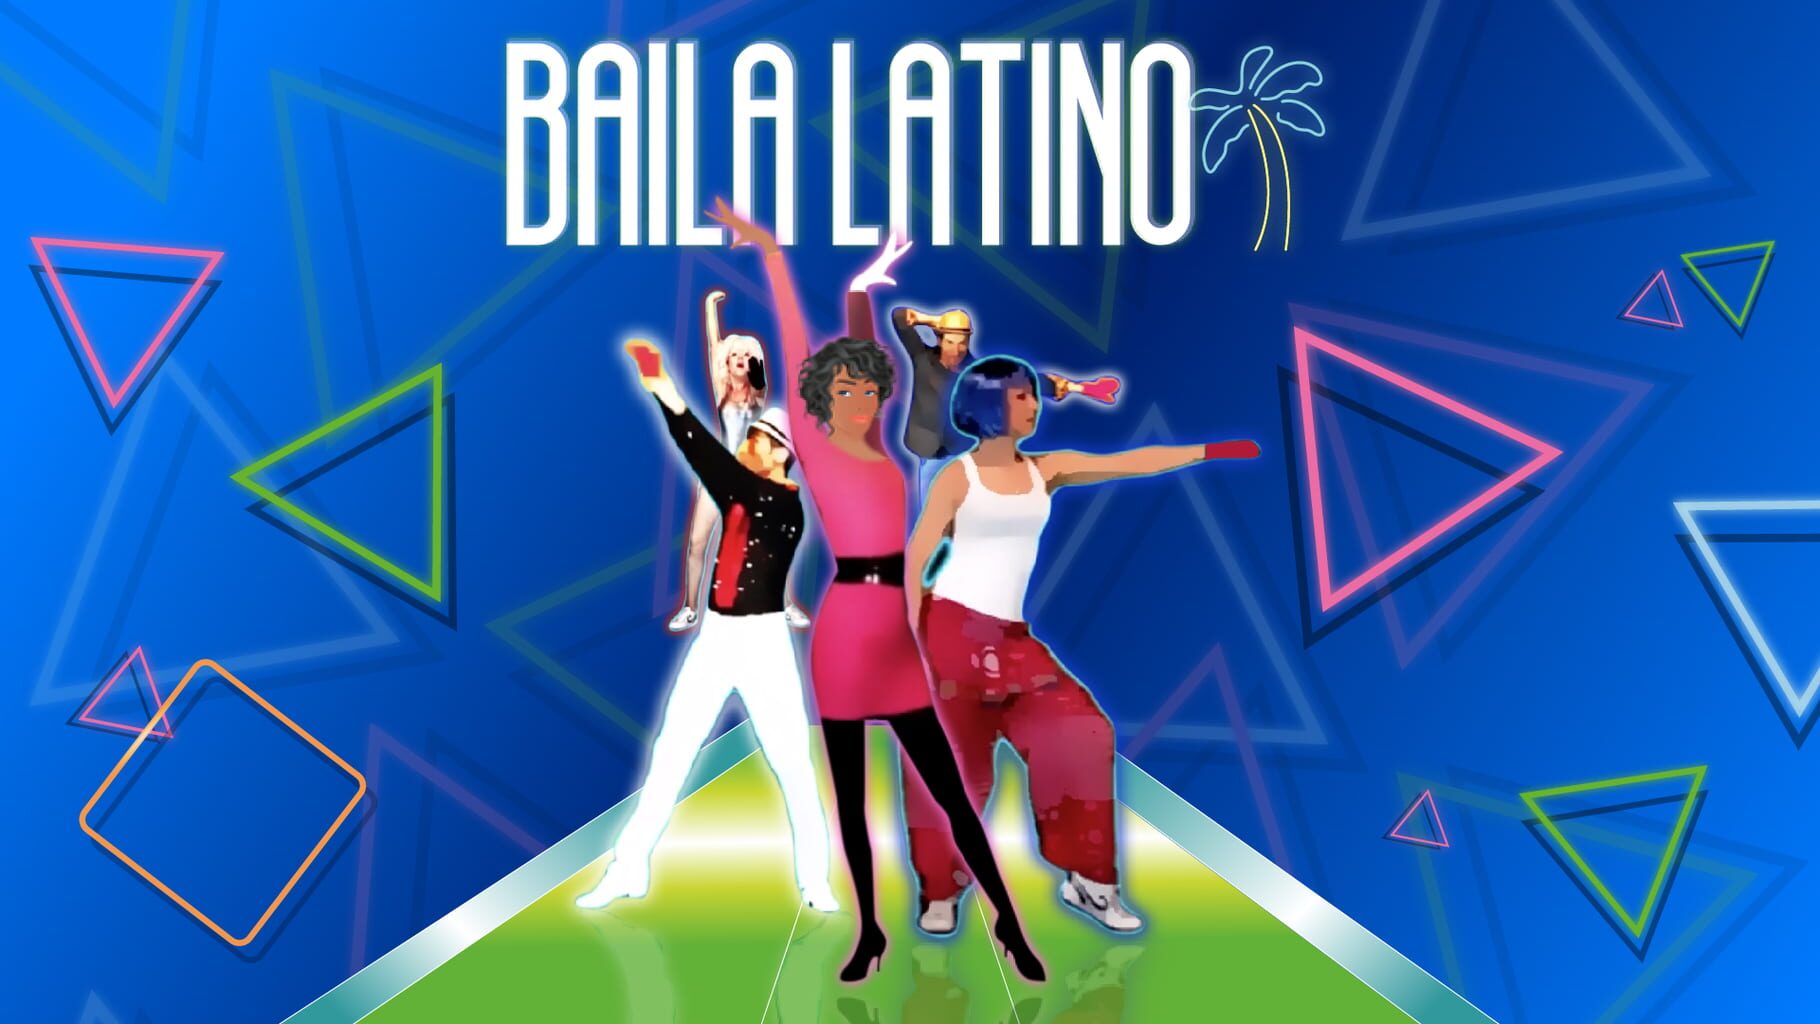 Baila Latino artwork